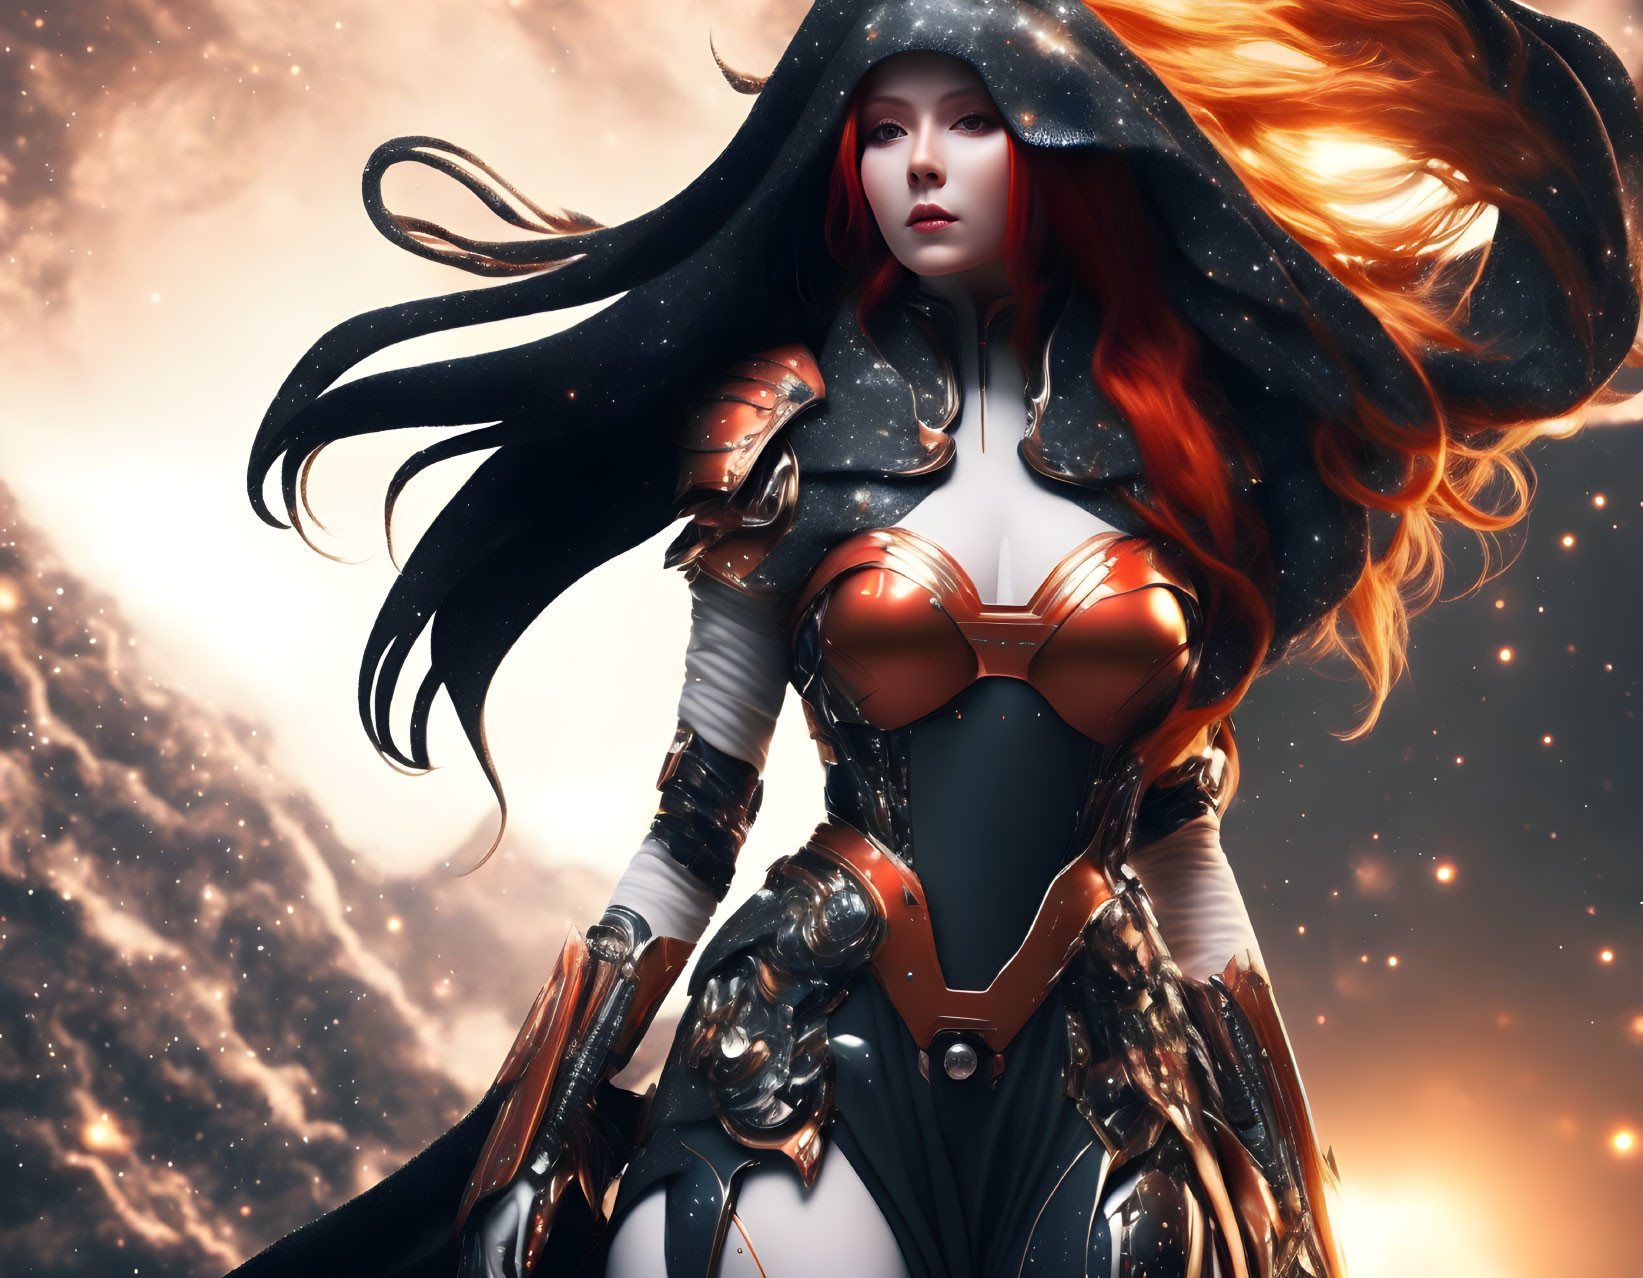 Red-haired fantasy female warrior in ornate armor against cosmic backdrop